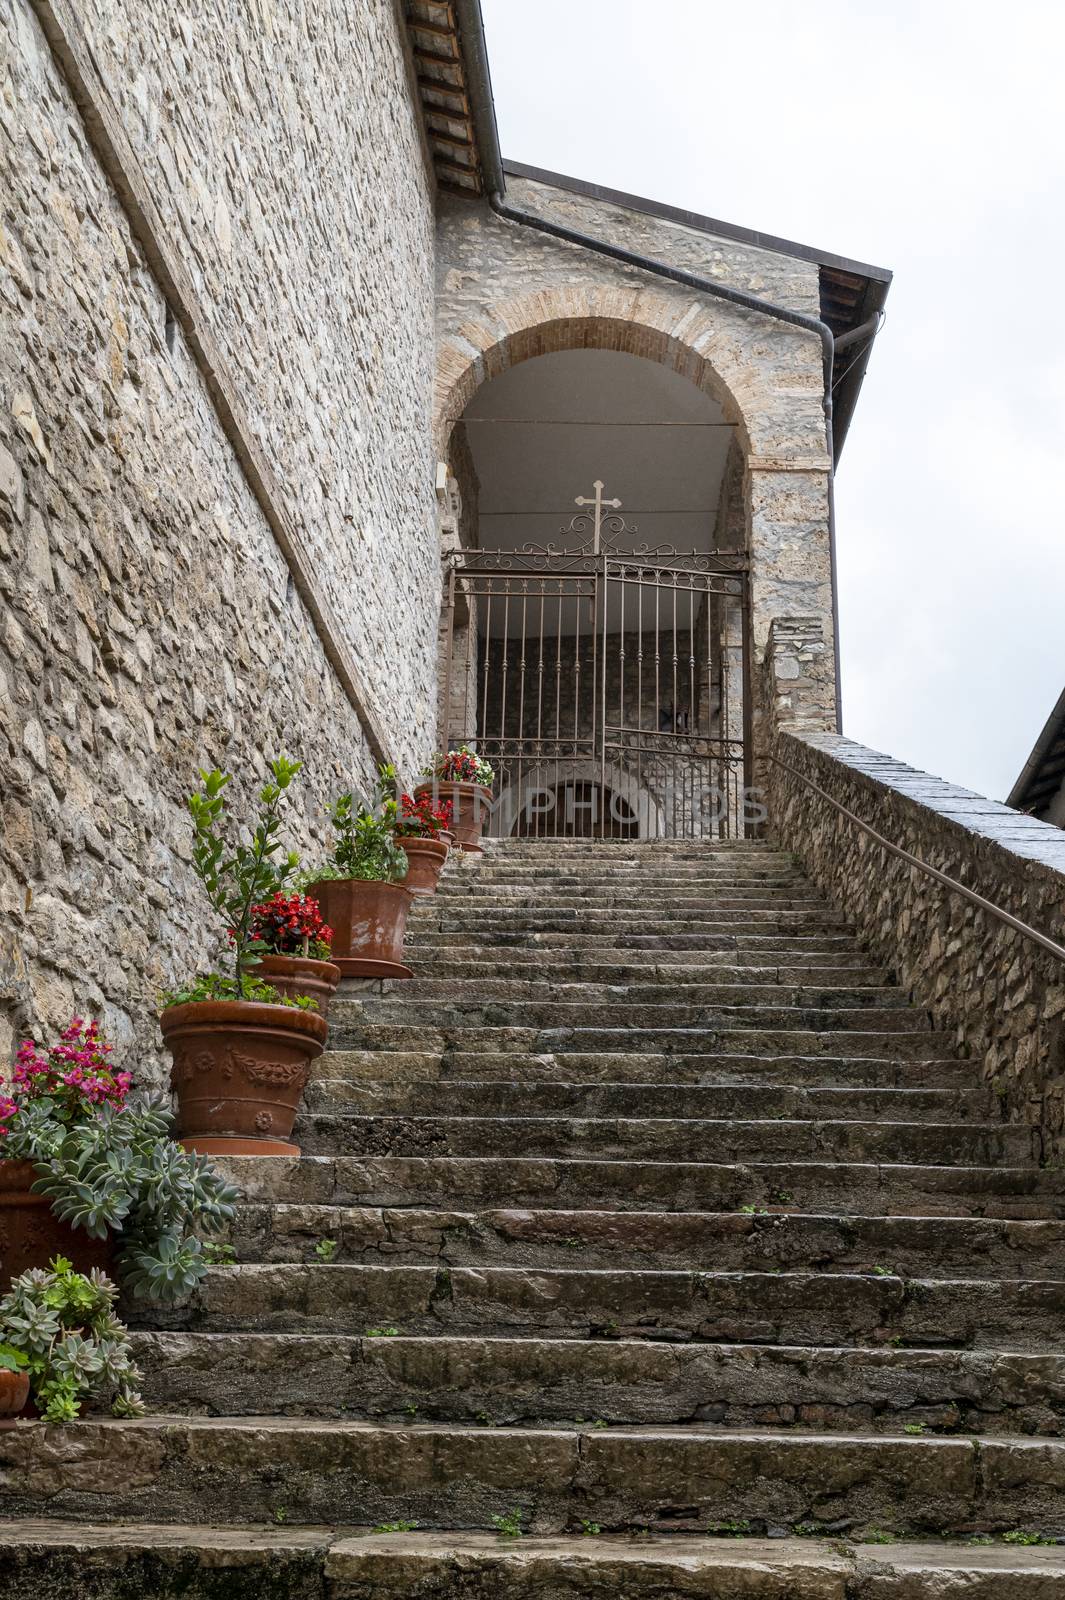 terni,italy october 16 2020:church of Santa Maria Annunziata and San Brizio in the center of the town of Papigno